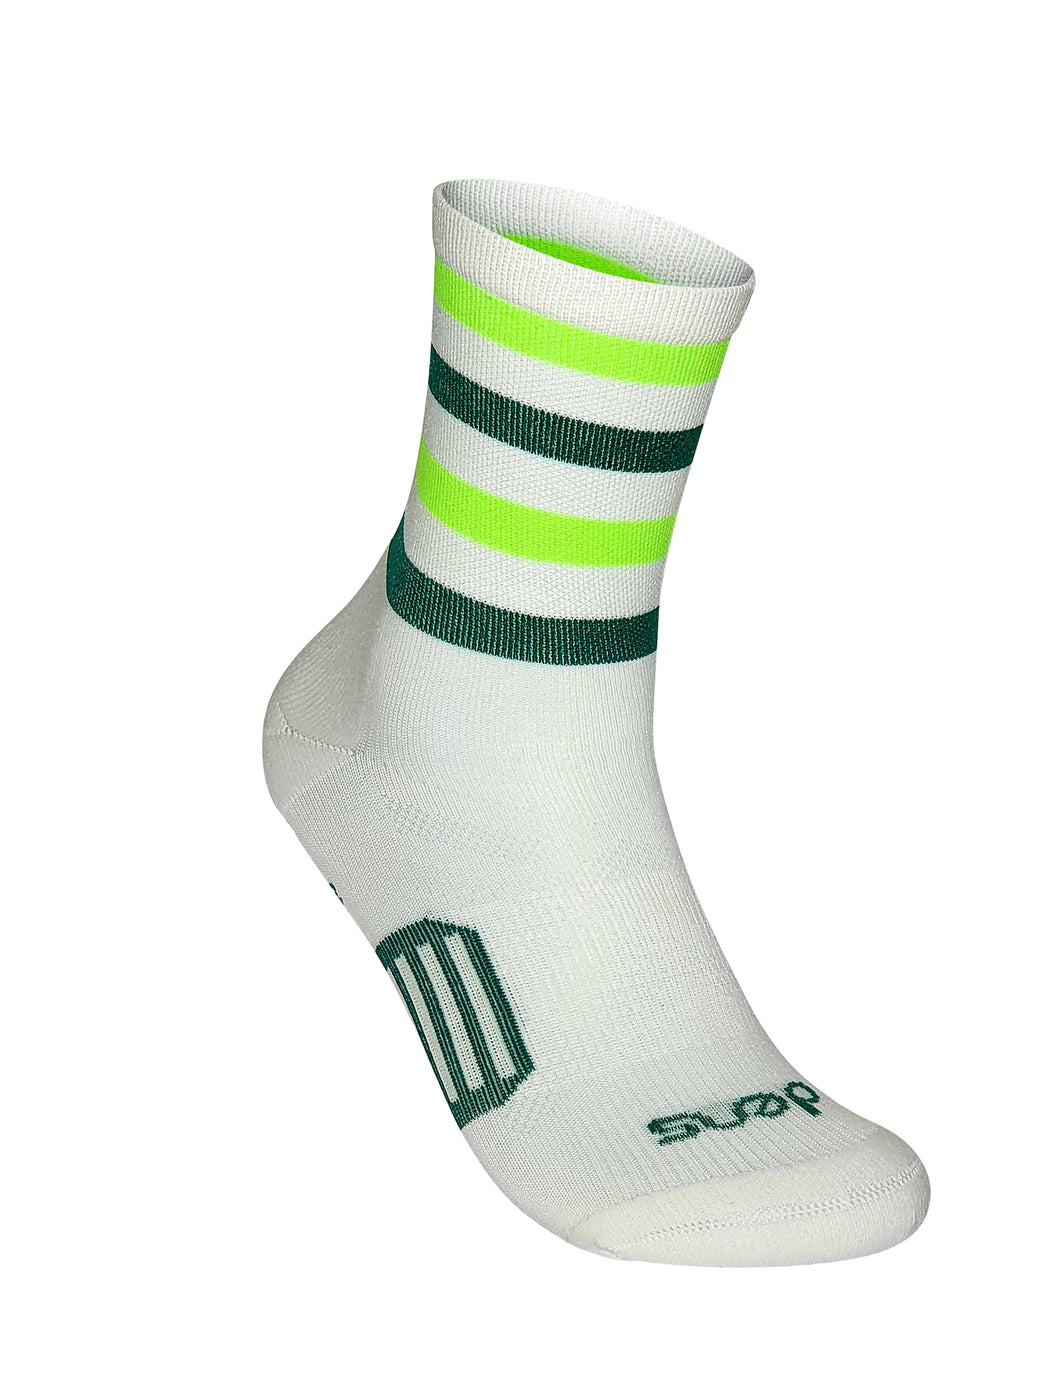 Dash Light Green and Dark Green Mini Crew Socks